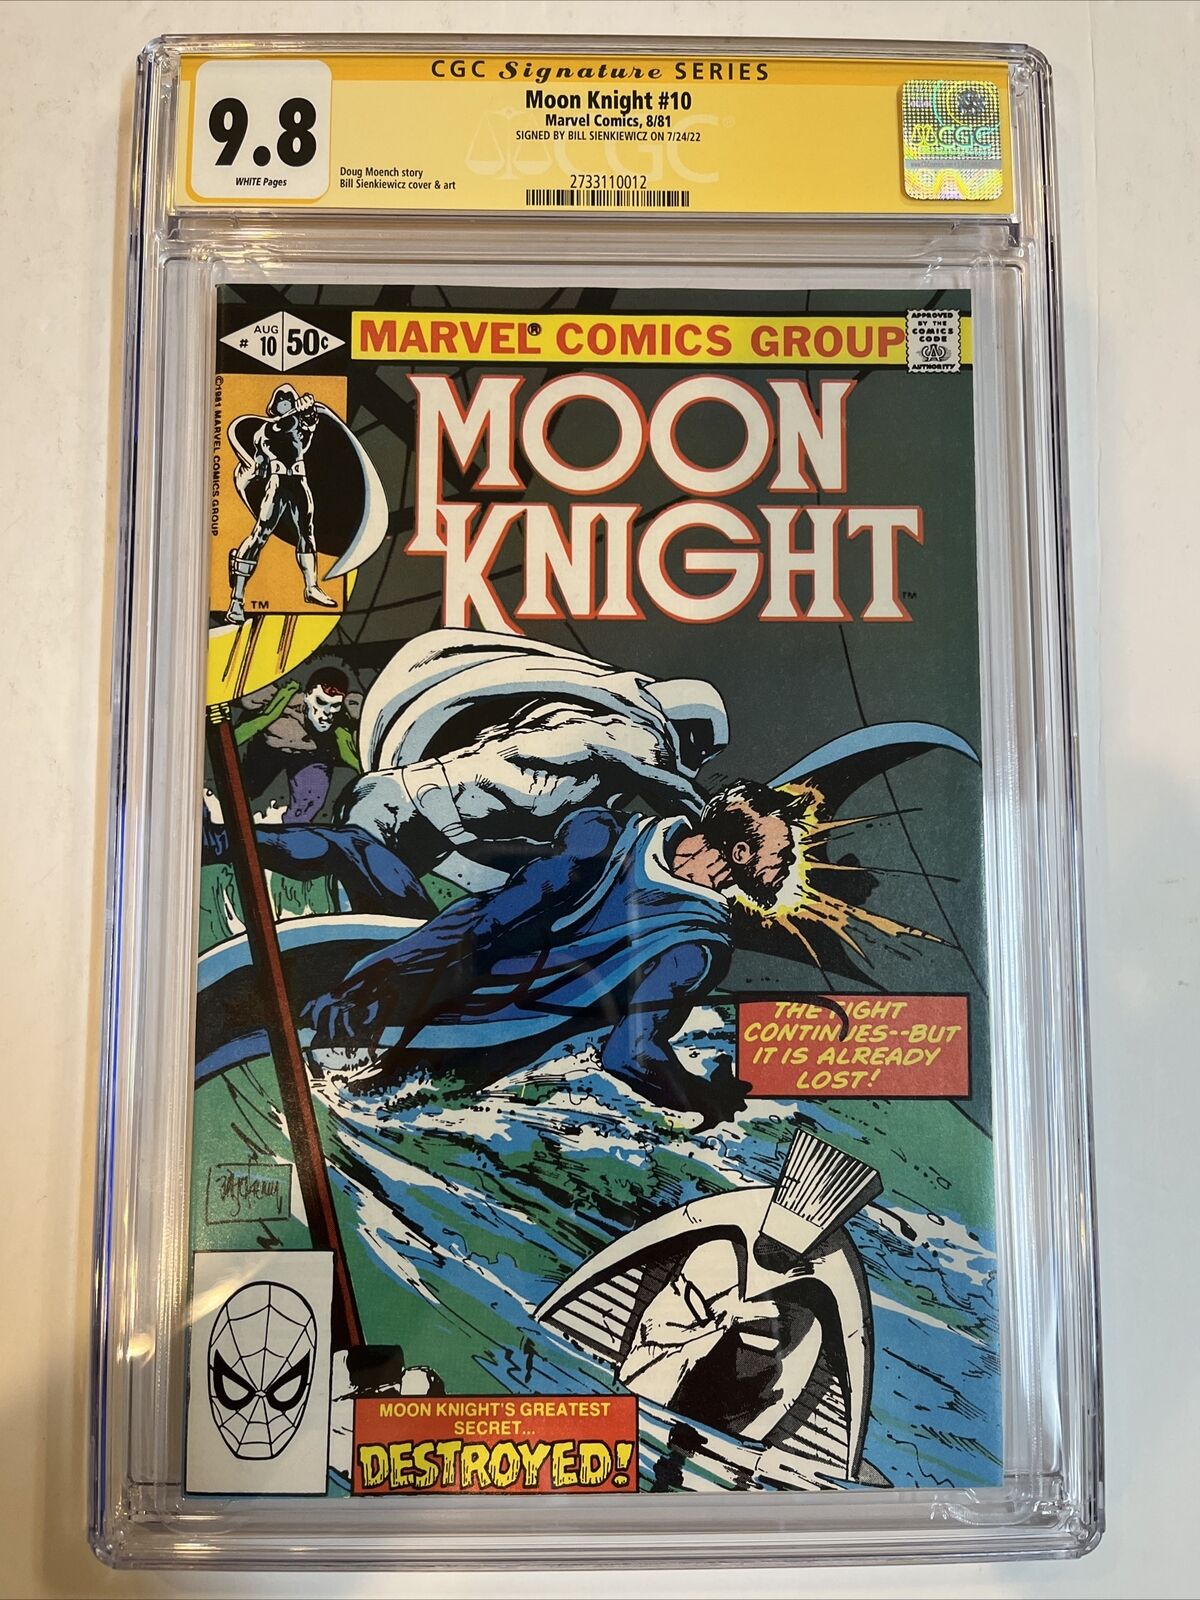 Moon Knight (1981) # 10 (CGC 9.8 SS WP) | Signed Sienkiewicz